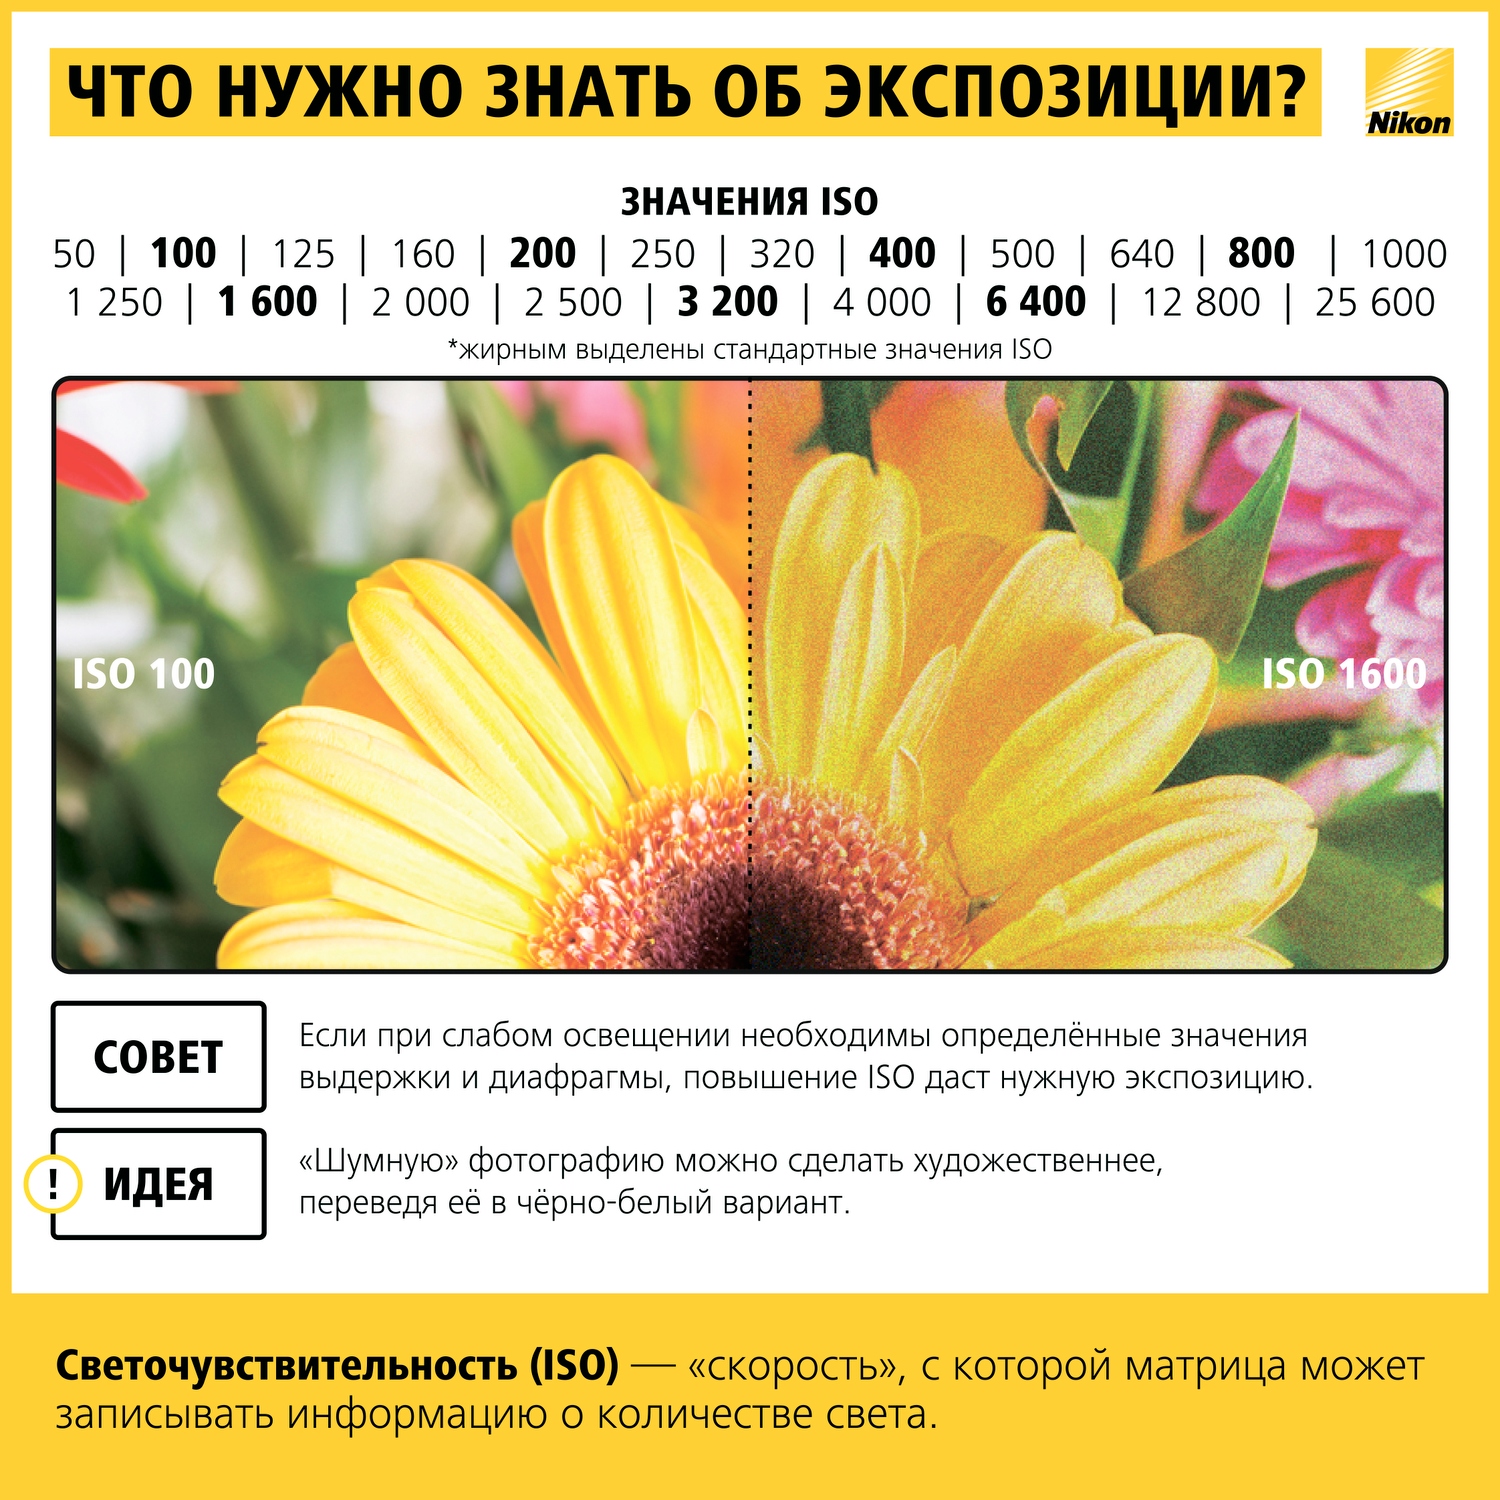 http://bigpicture.ru/wp-content/uploads/2015/04/info_nikon_07.jpg